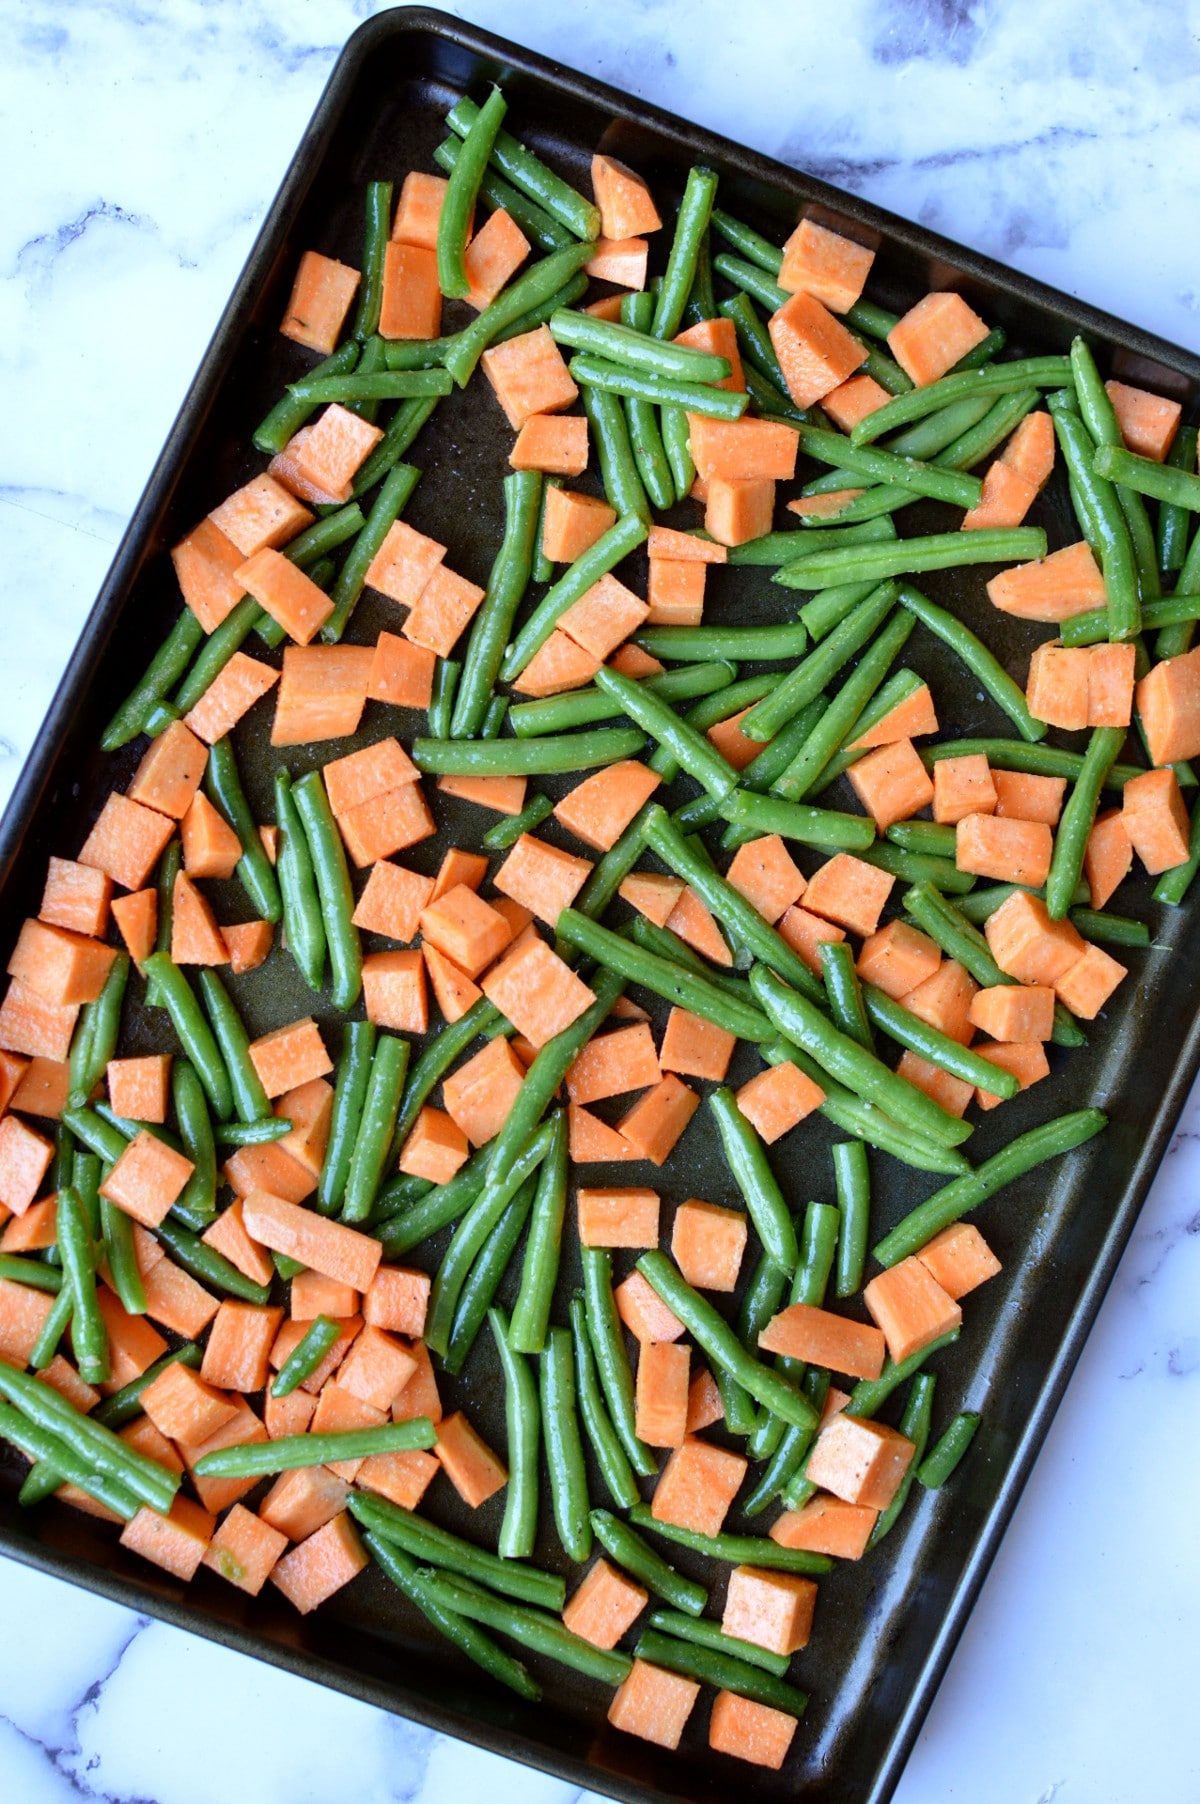 cut up veggies on a sheet pan